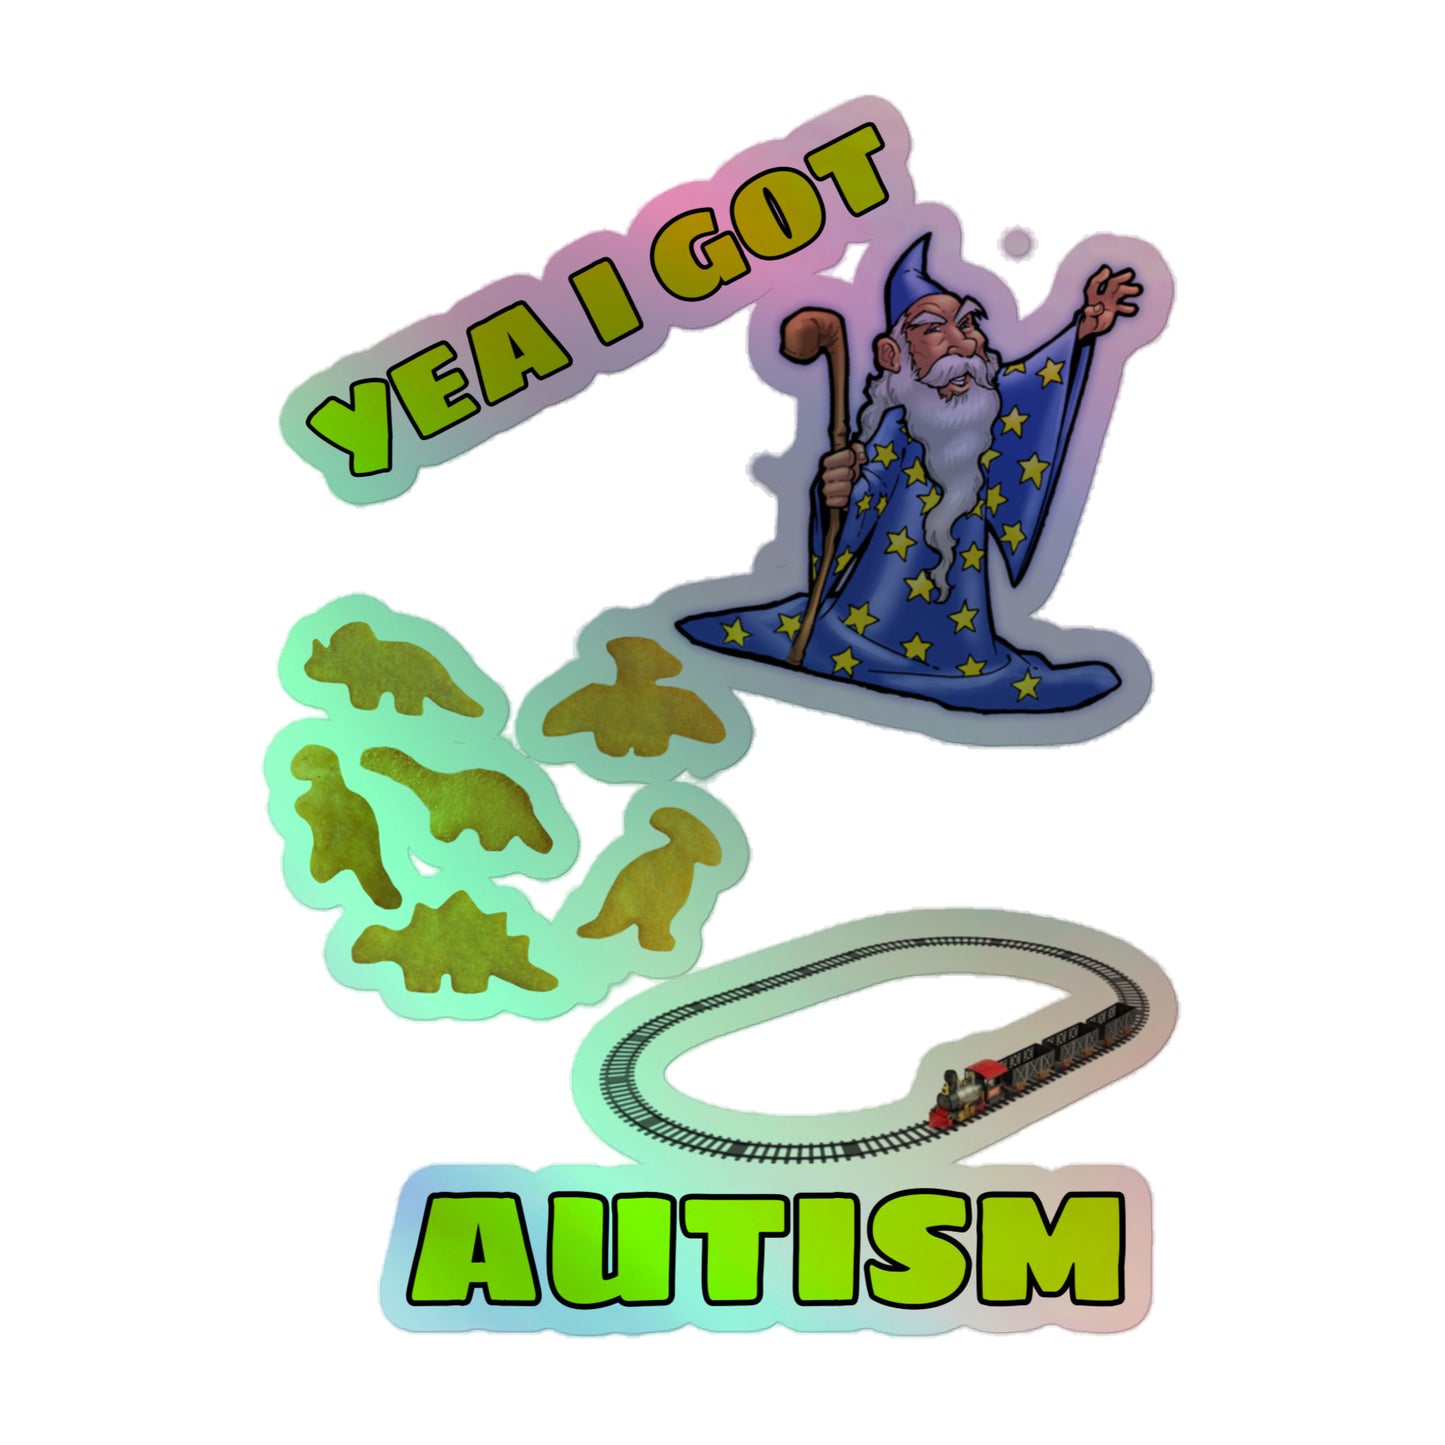 Yea I got autism (sticker)